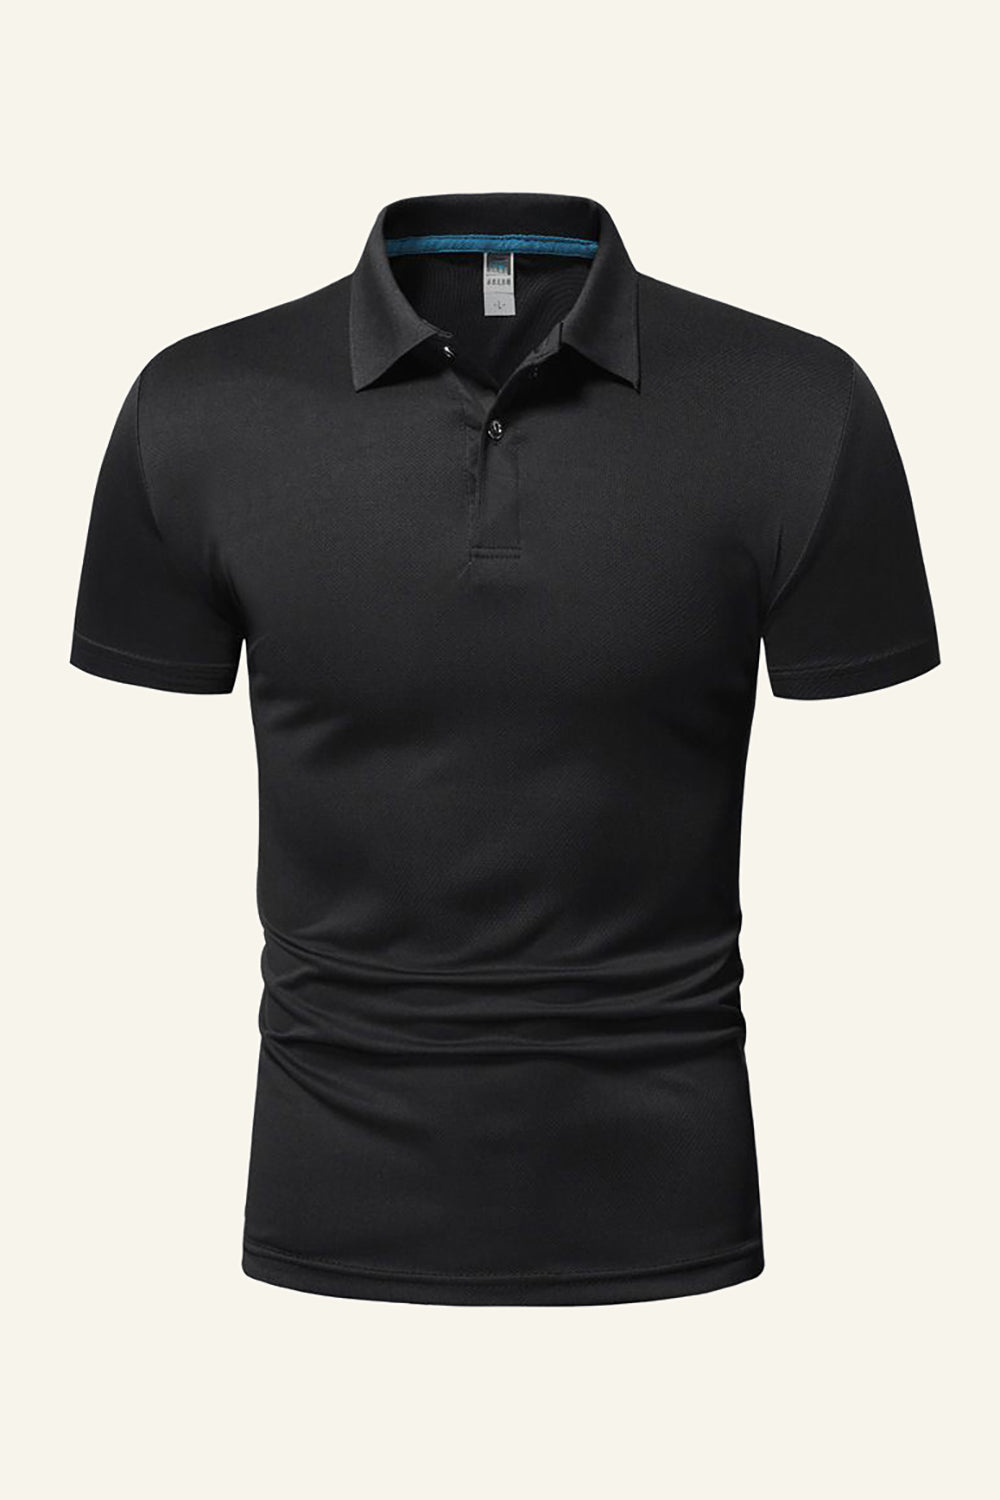 Black Short-Sleeves Casual Polo Shirt